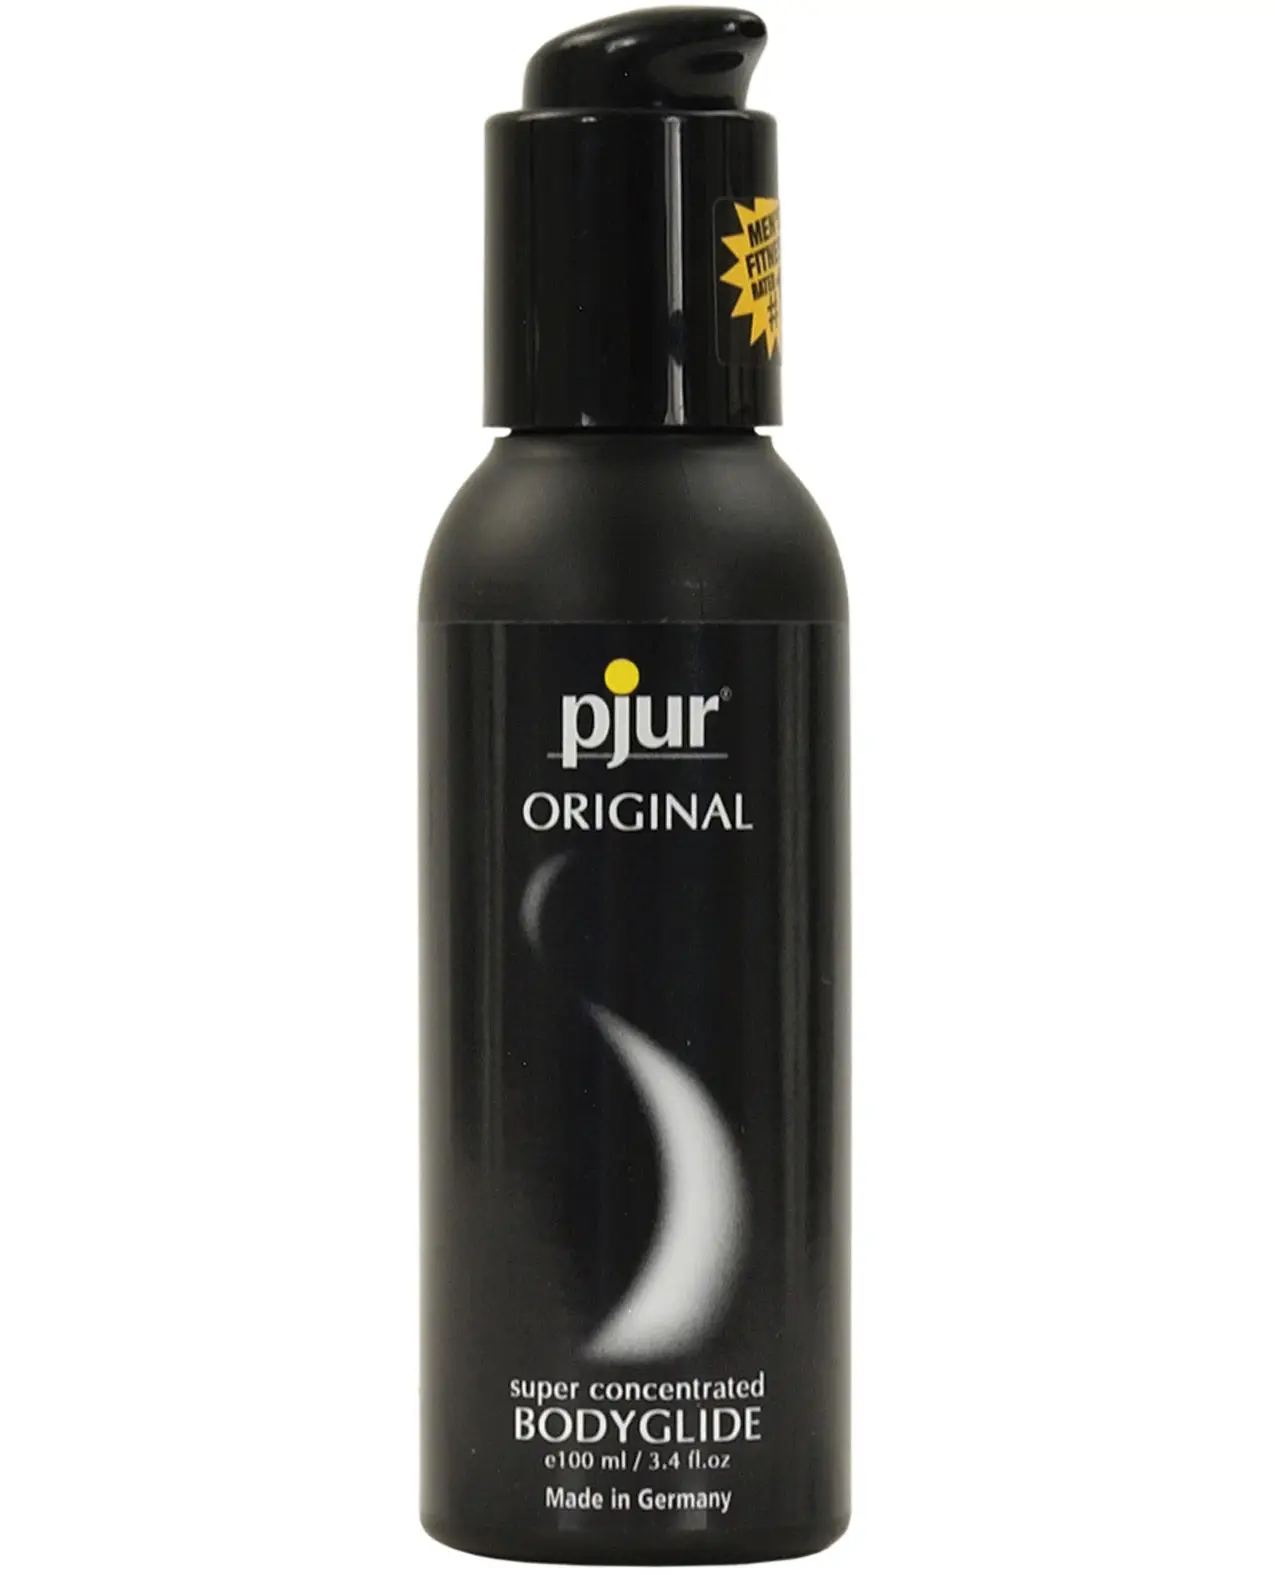 Pjur Original Silicone Personal Lubricant – 100ml Bottle